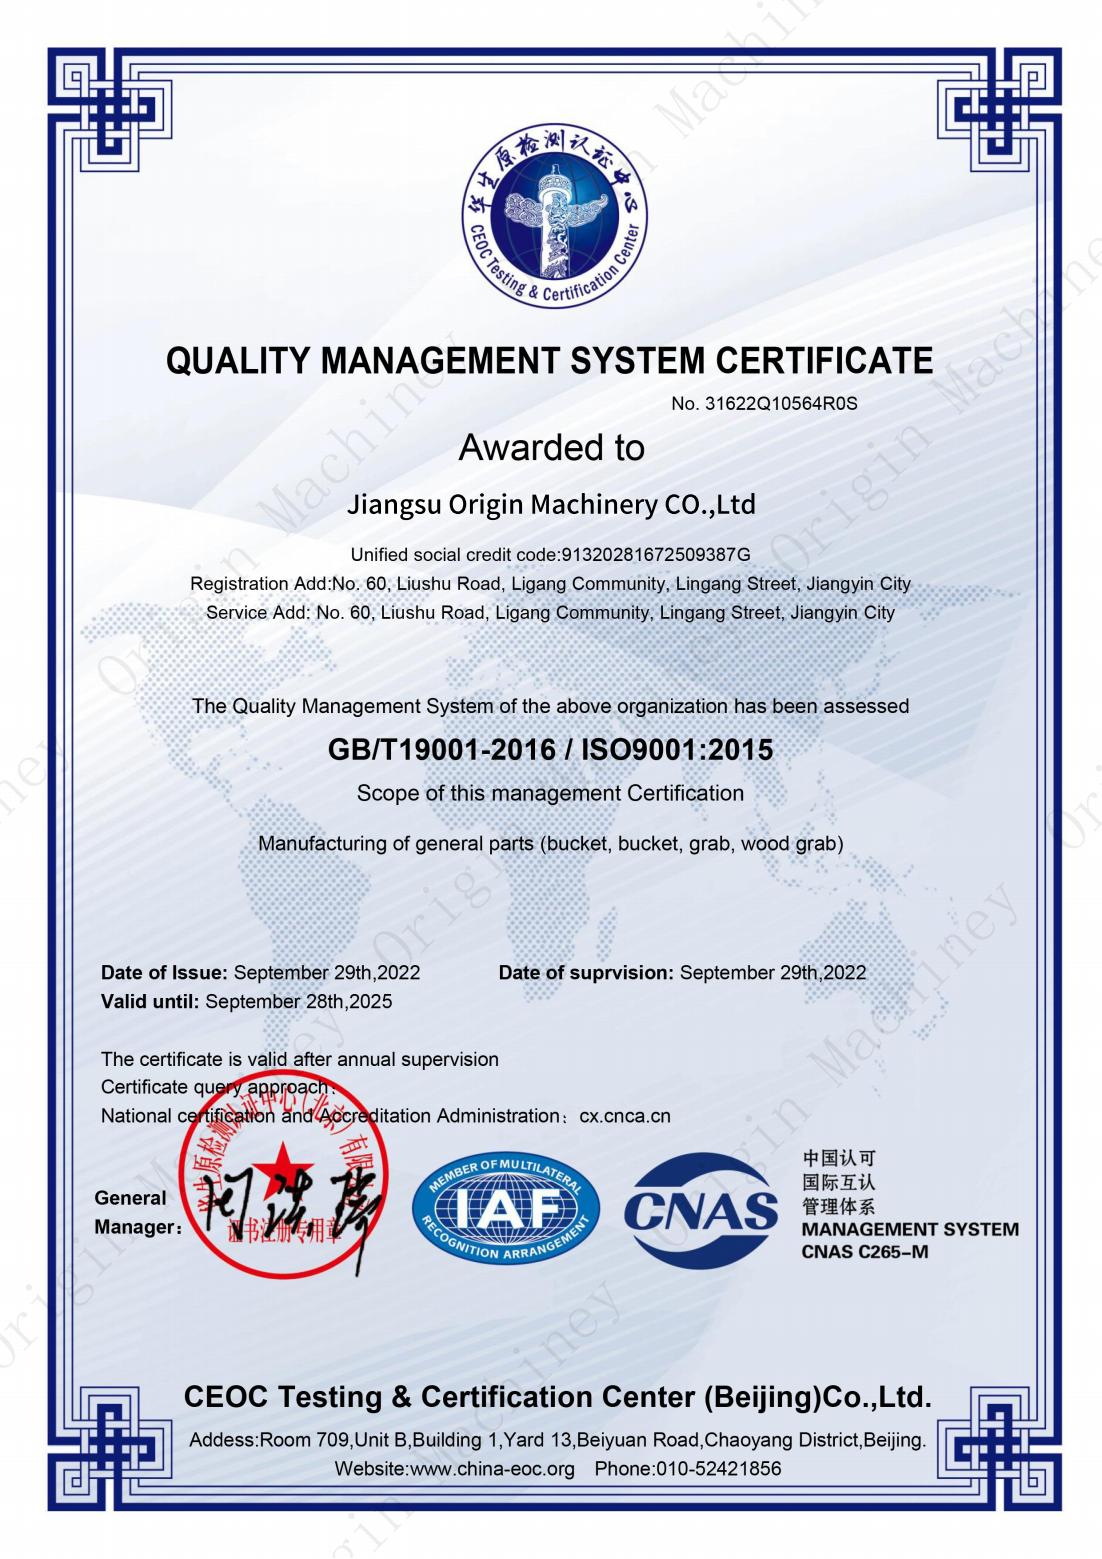 CNAS-Quality Management System Certificate - Origin Machinery(1)_00